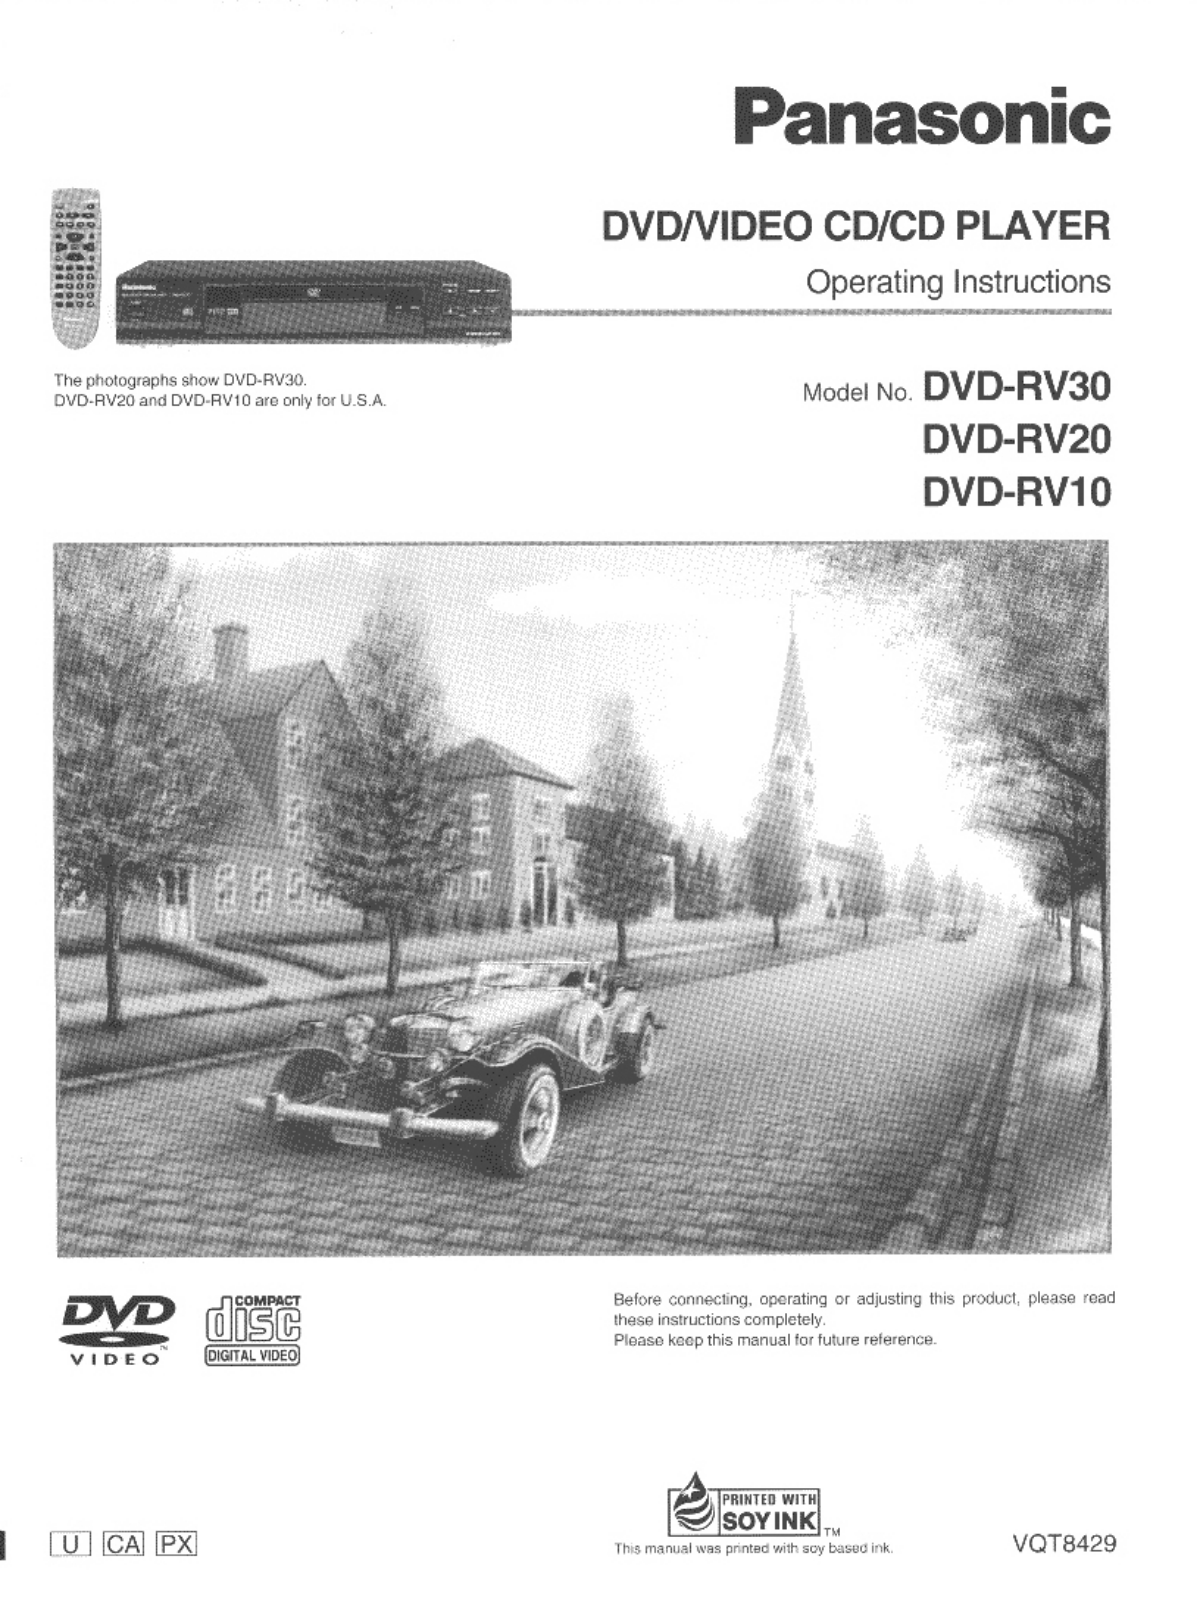 Panasonic DVD-RV20, DVD-RV10, DVD-RV30 User Manual